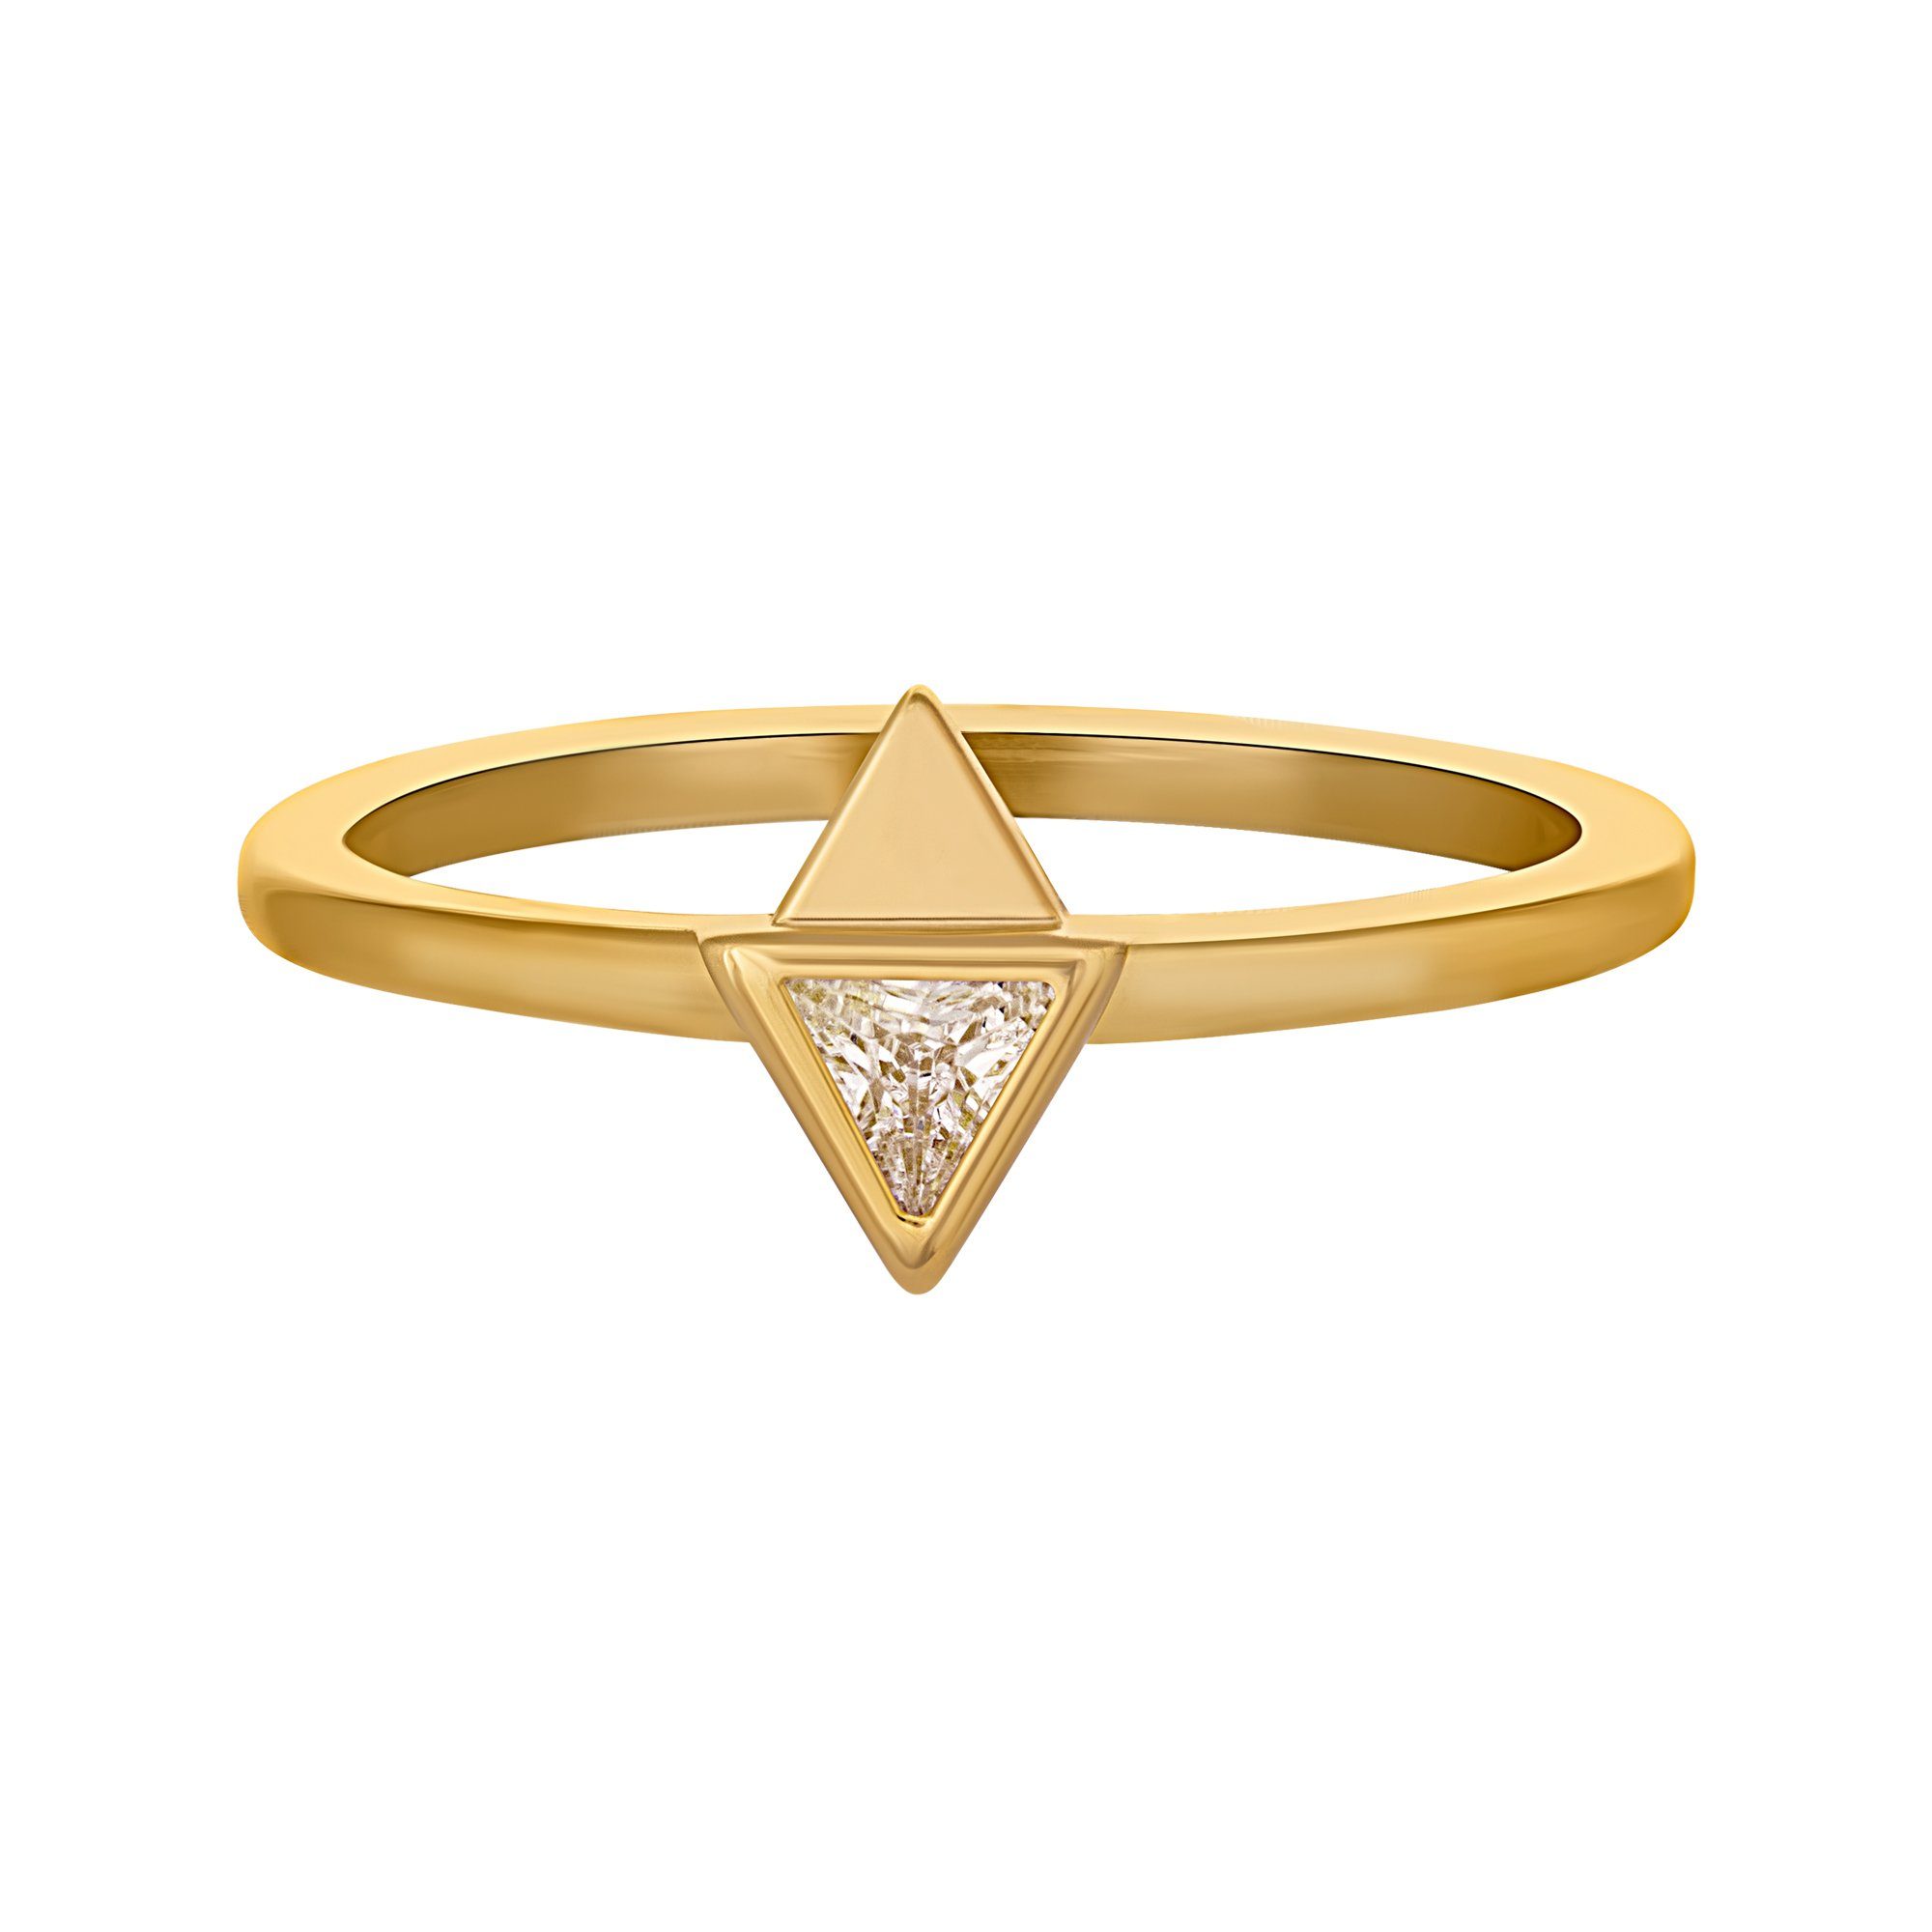 Dreieck mit 925 Fingerring CAÏ Silber vergoldet Zirkonia